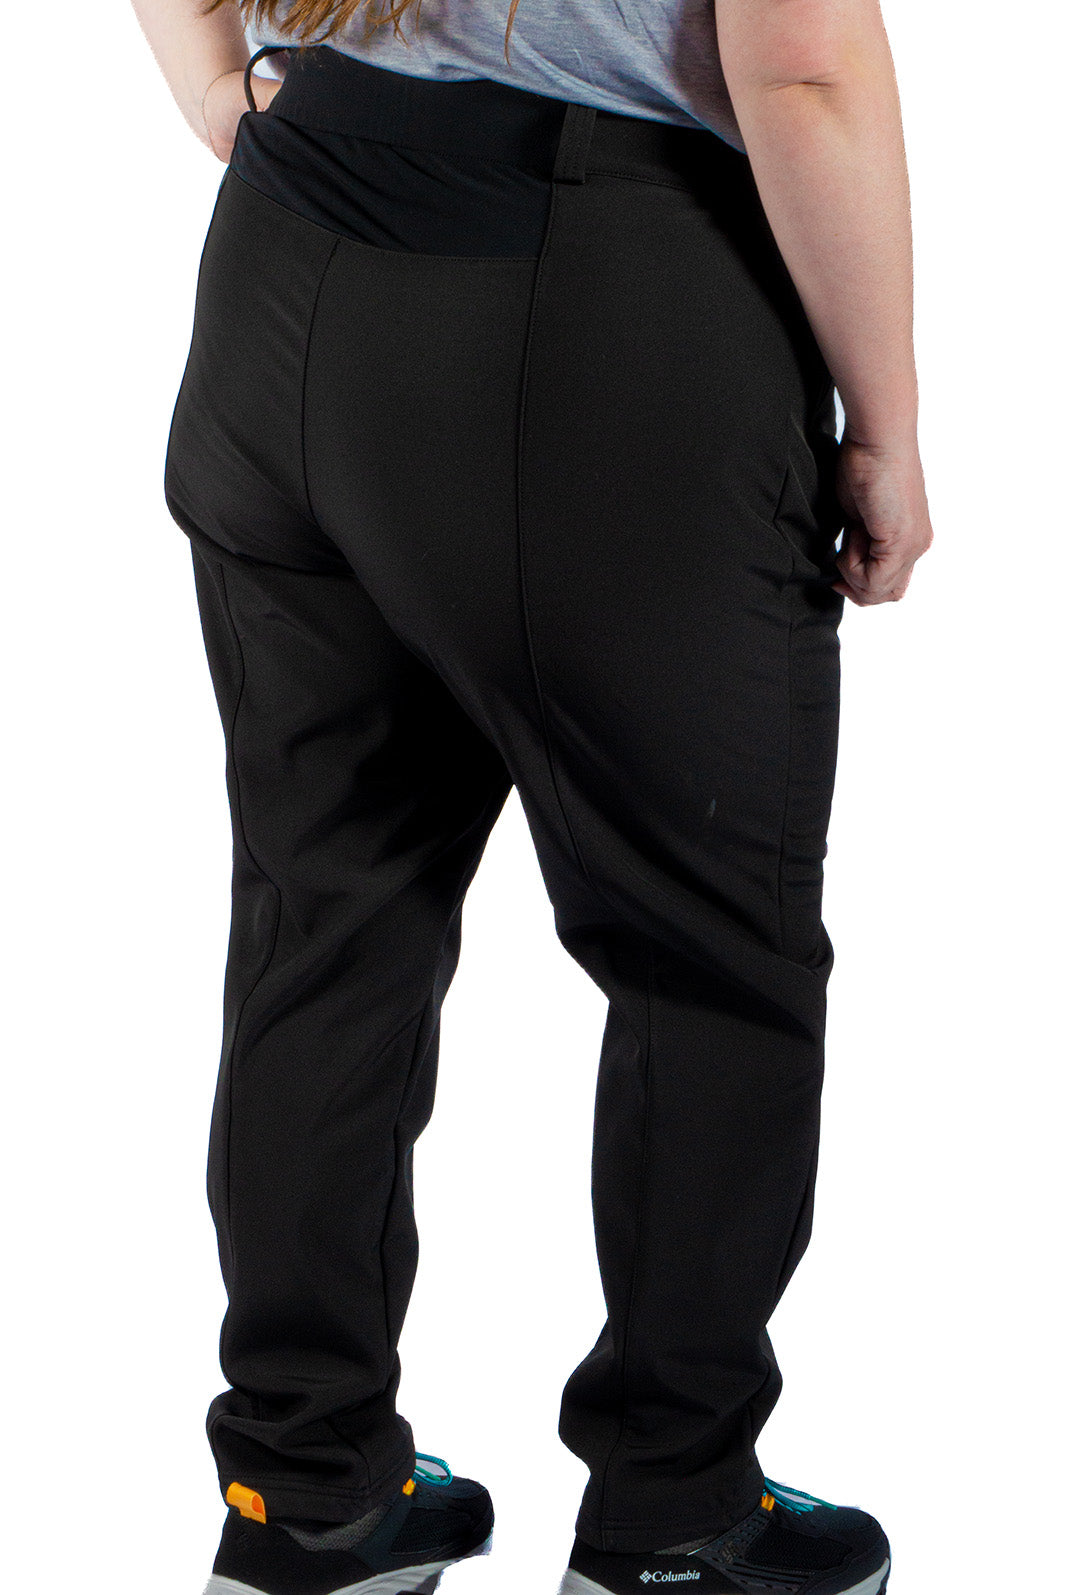 Plus Size Venture Softshell Skinny Pants by Sportive Plus